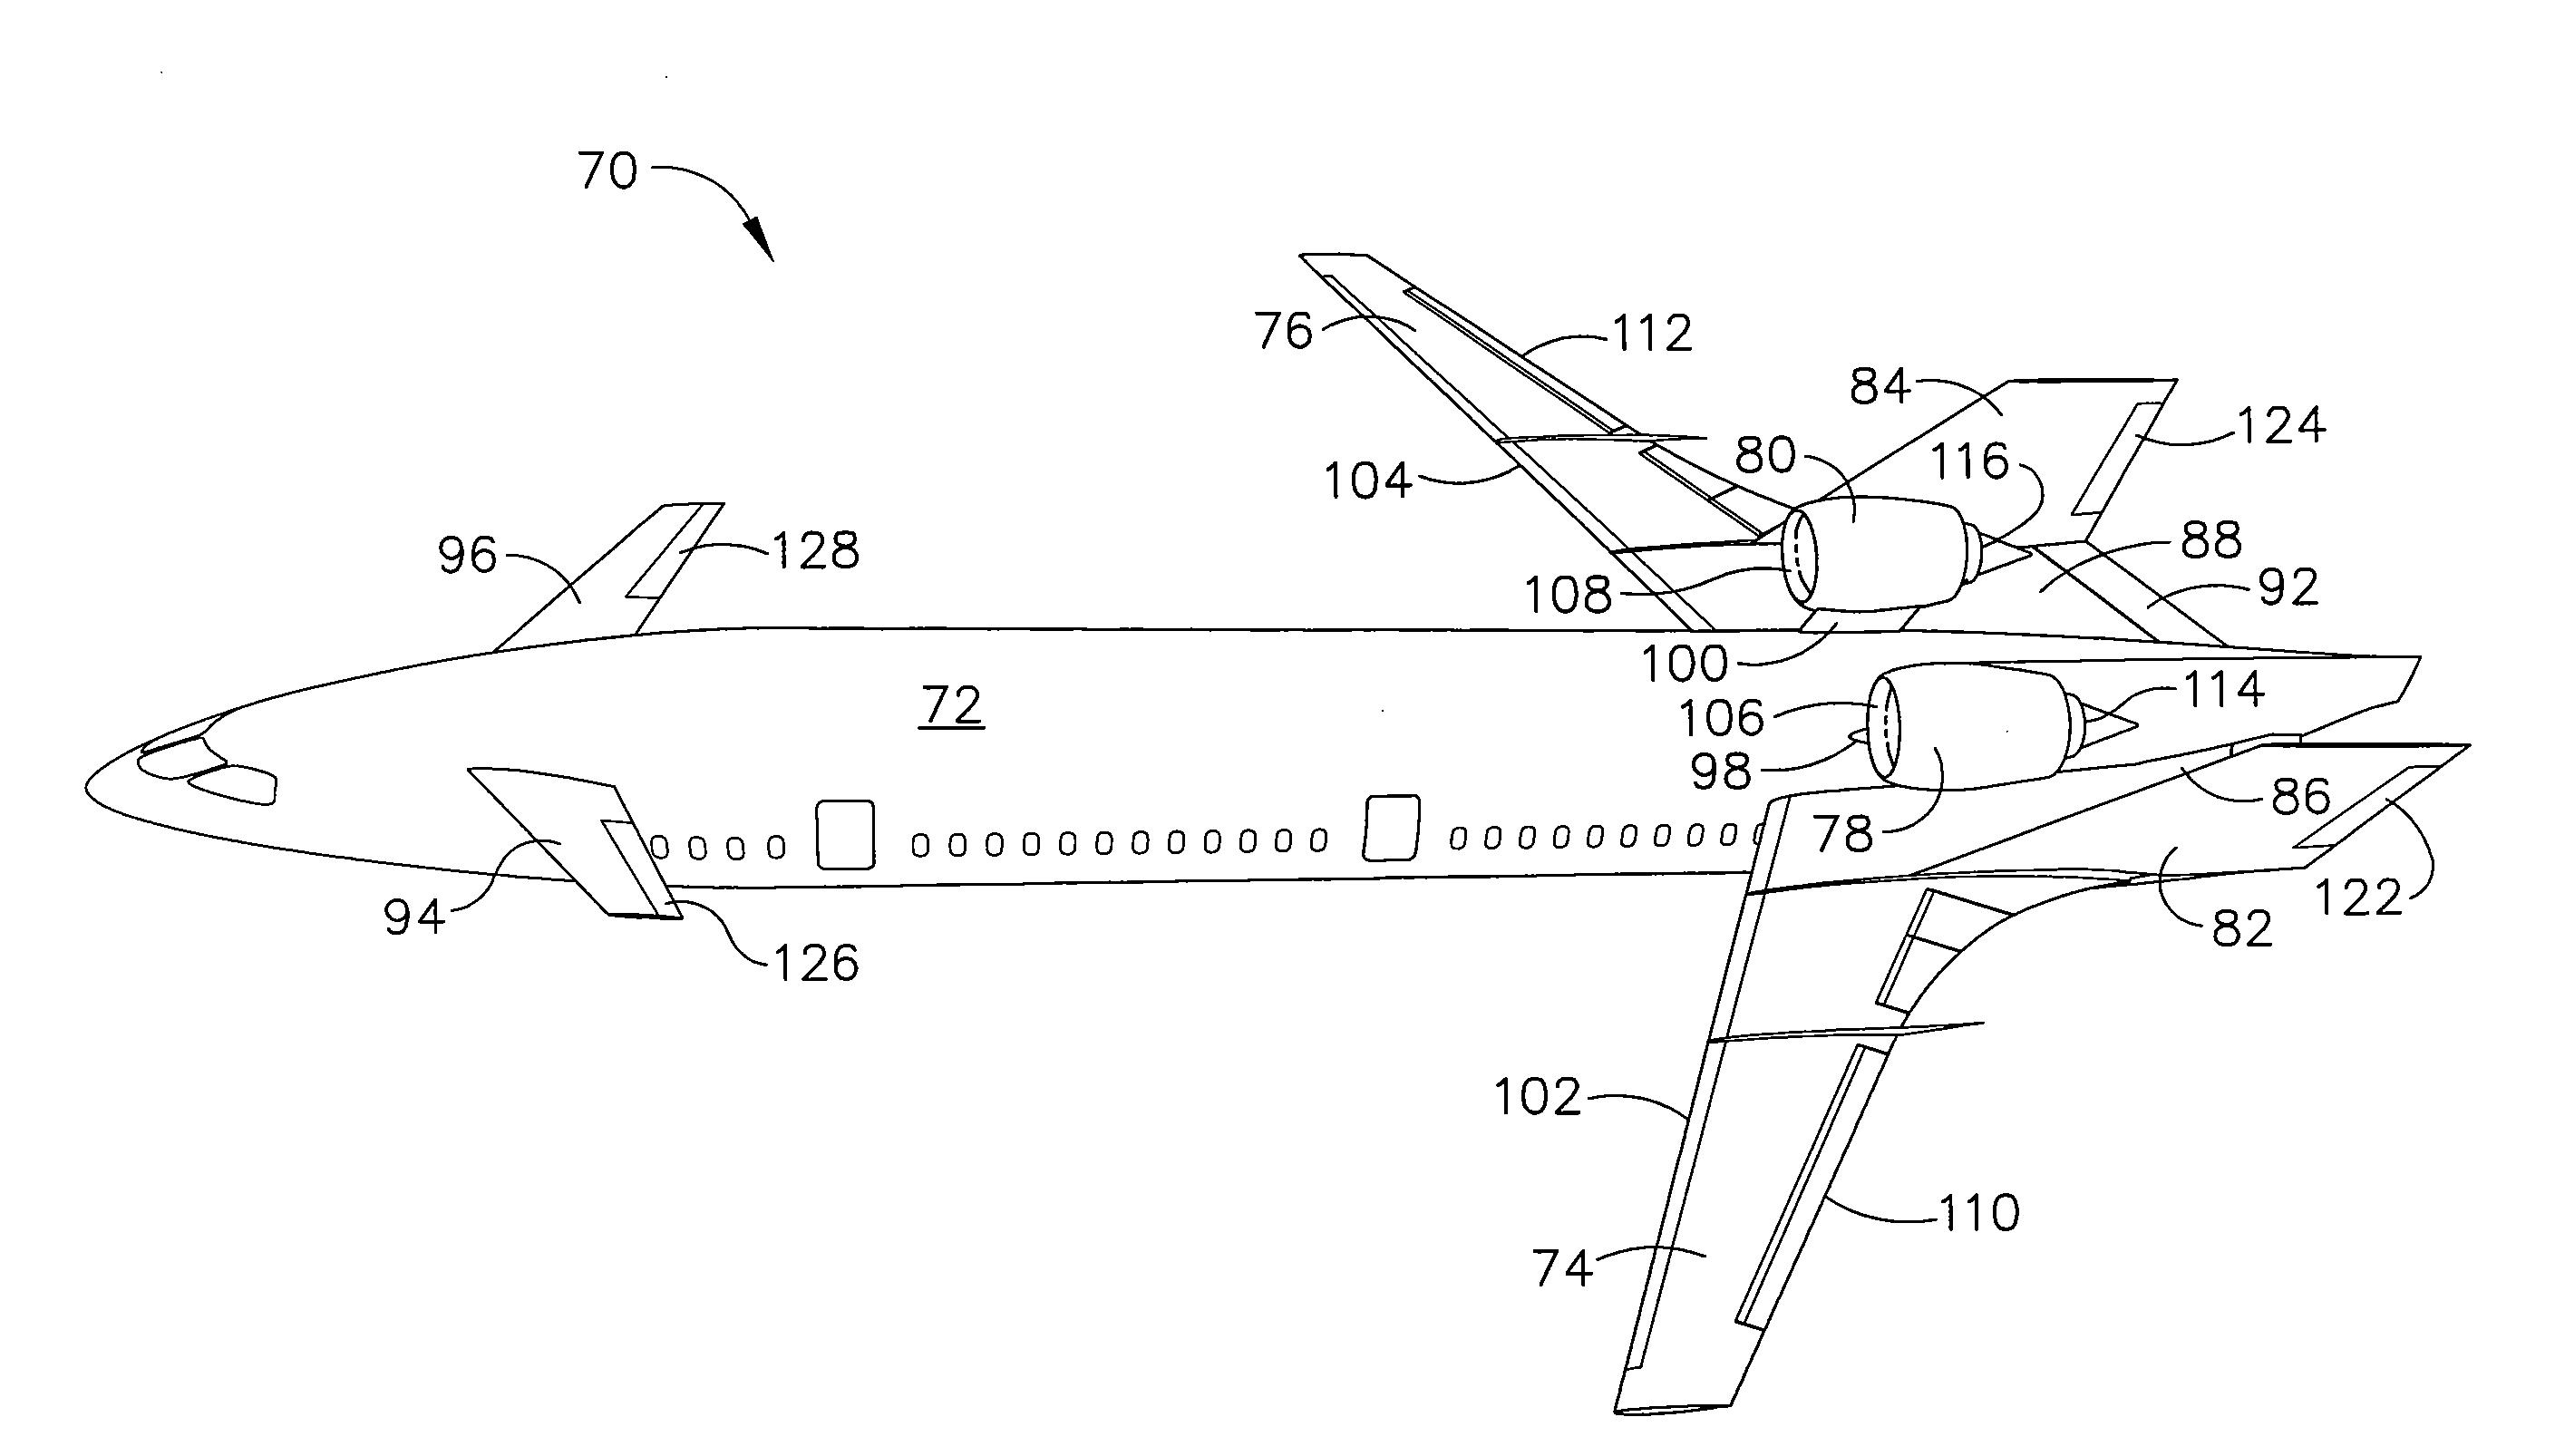 Airplane configuration